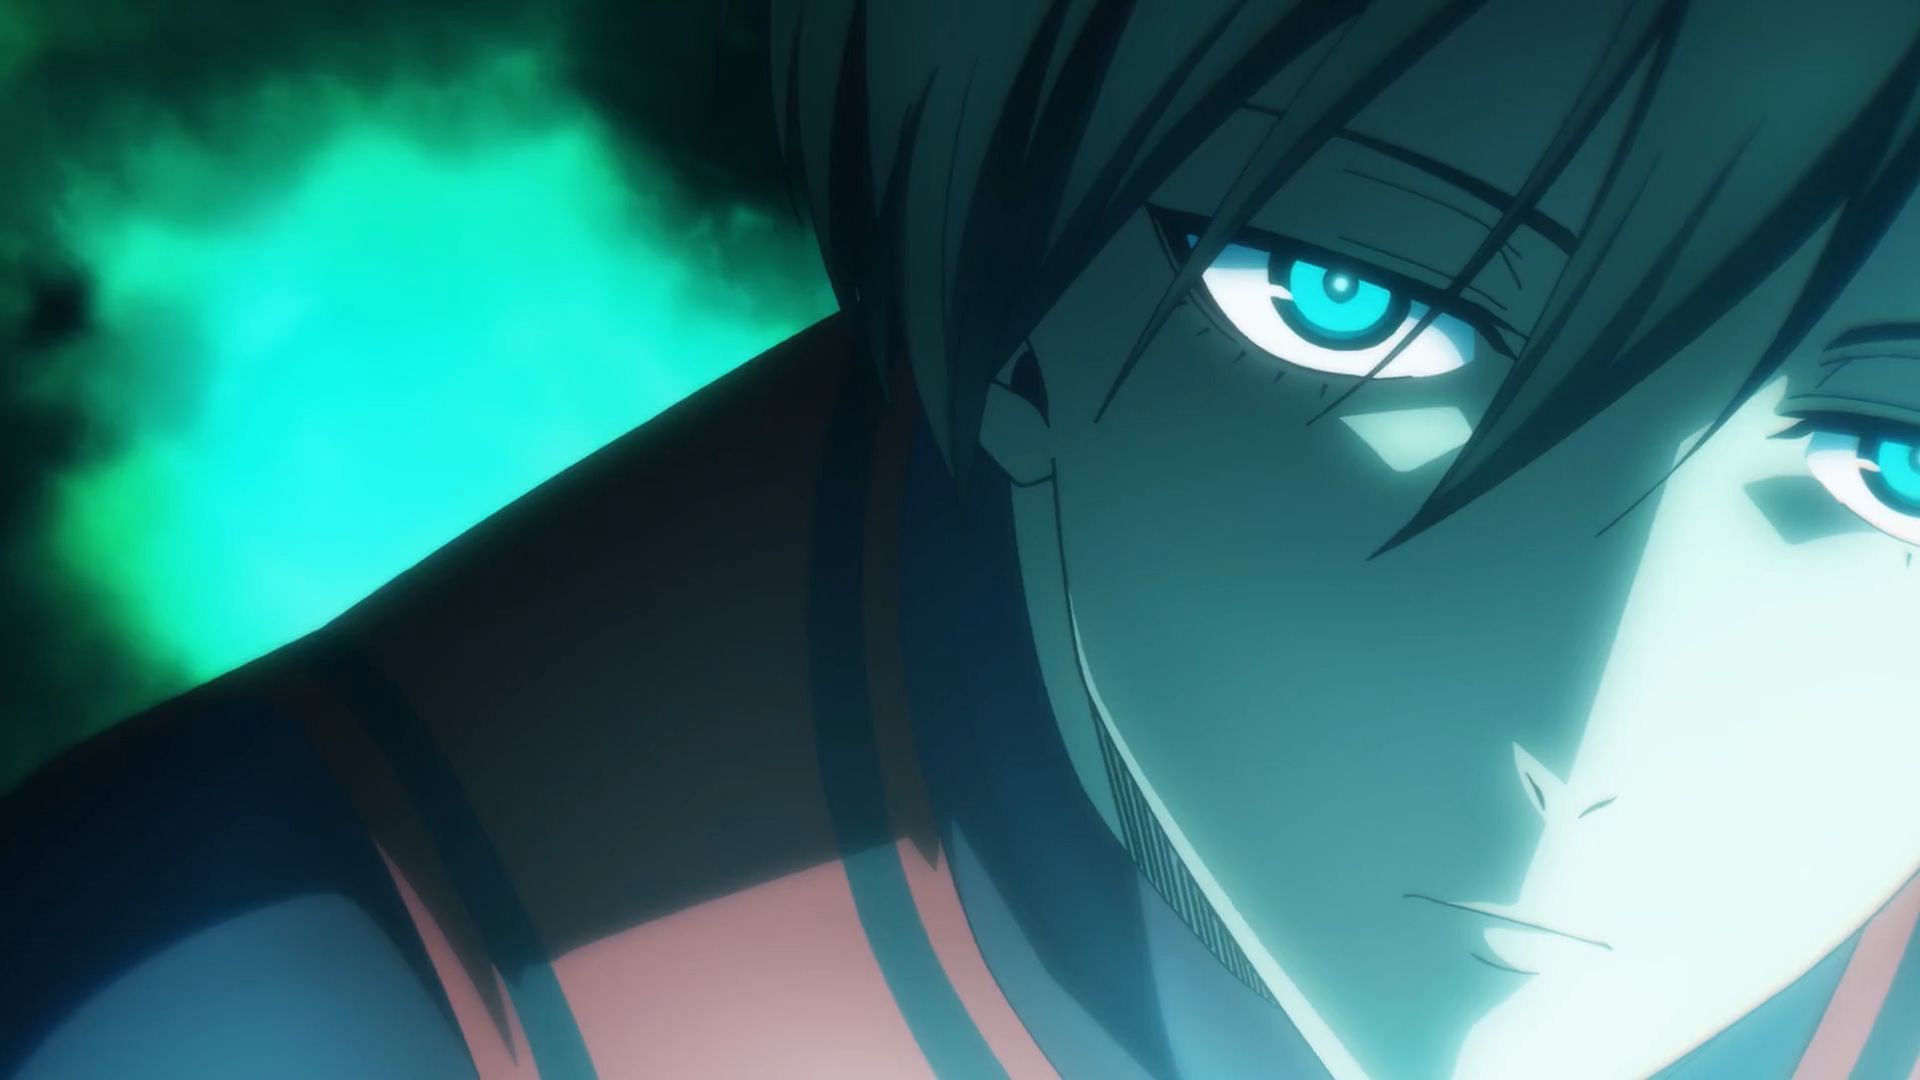 Nagi vs itoshi rin do anime de #bluelock #animeedit blue lock